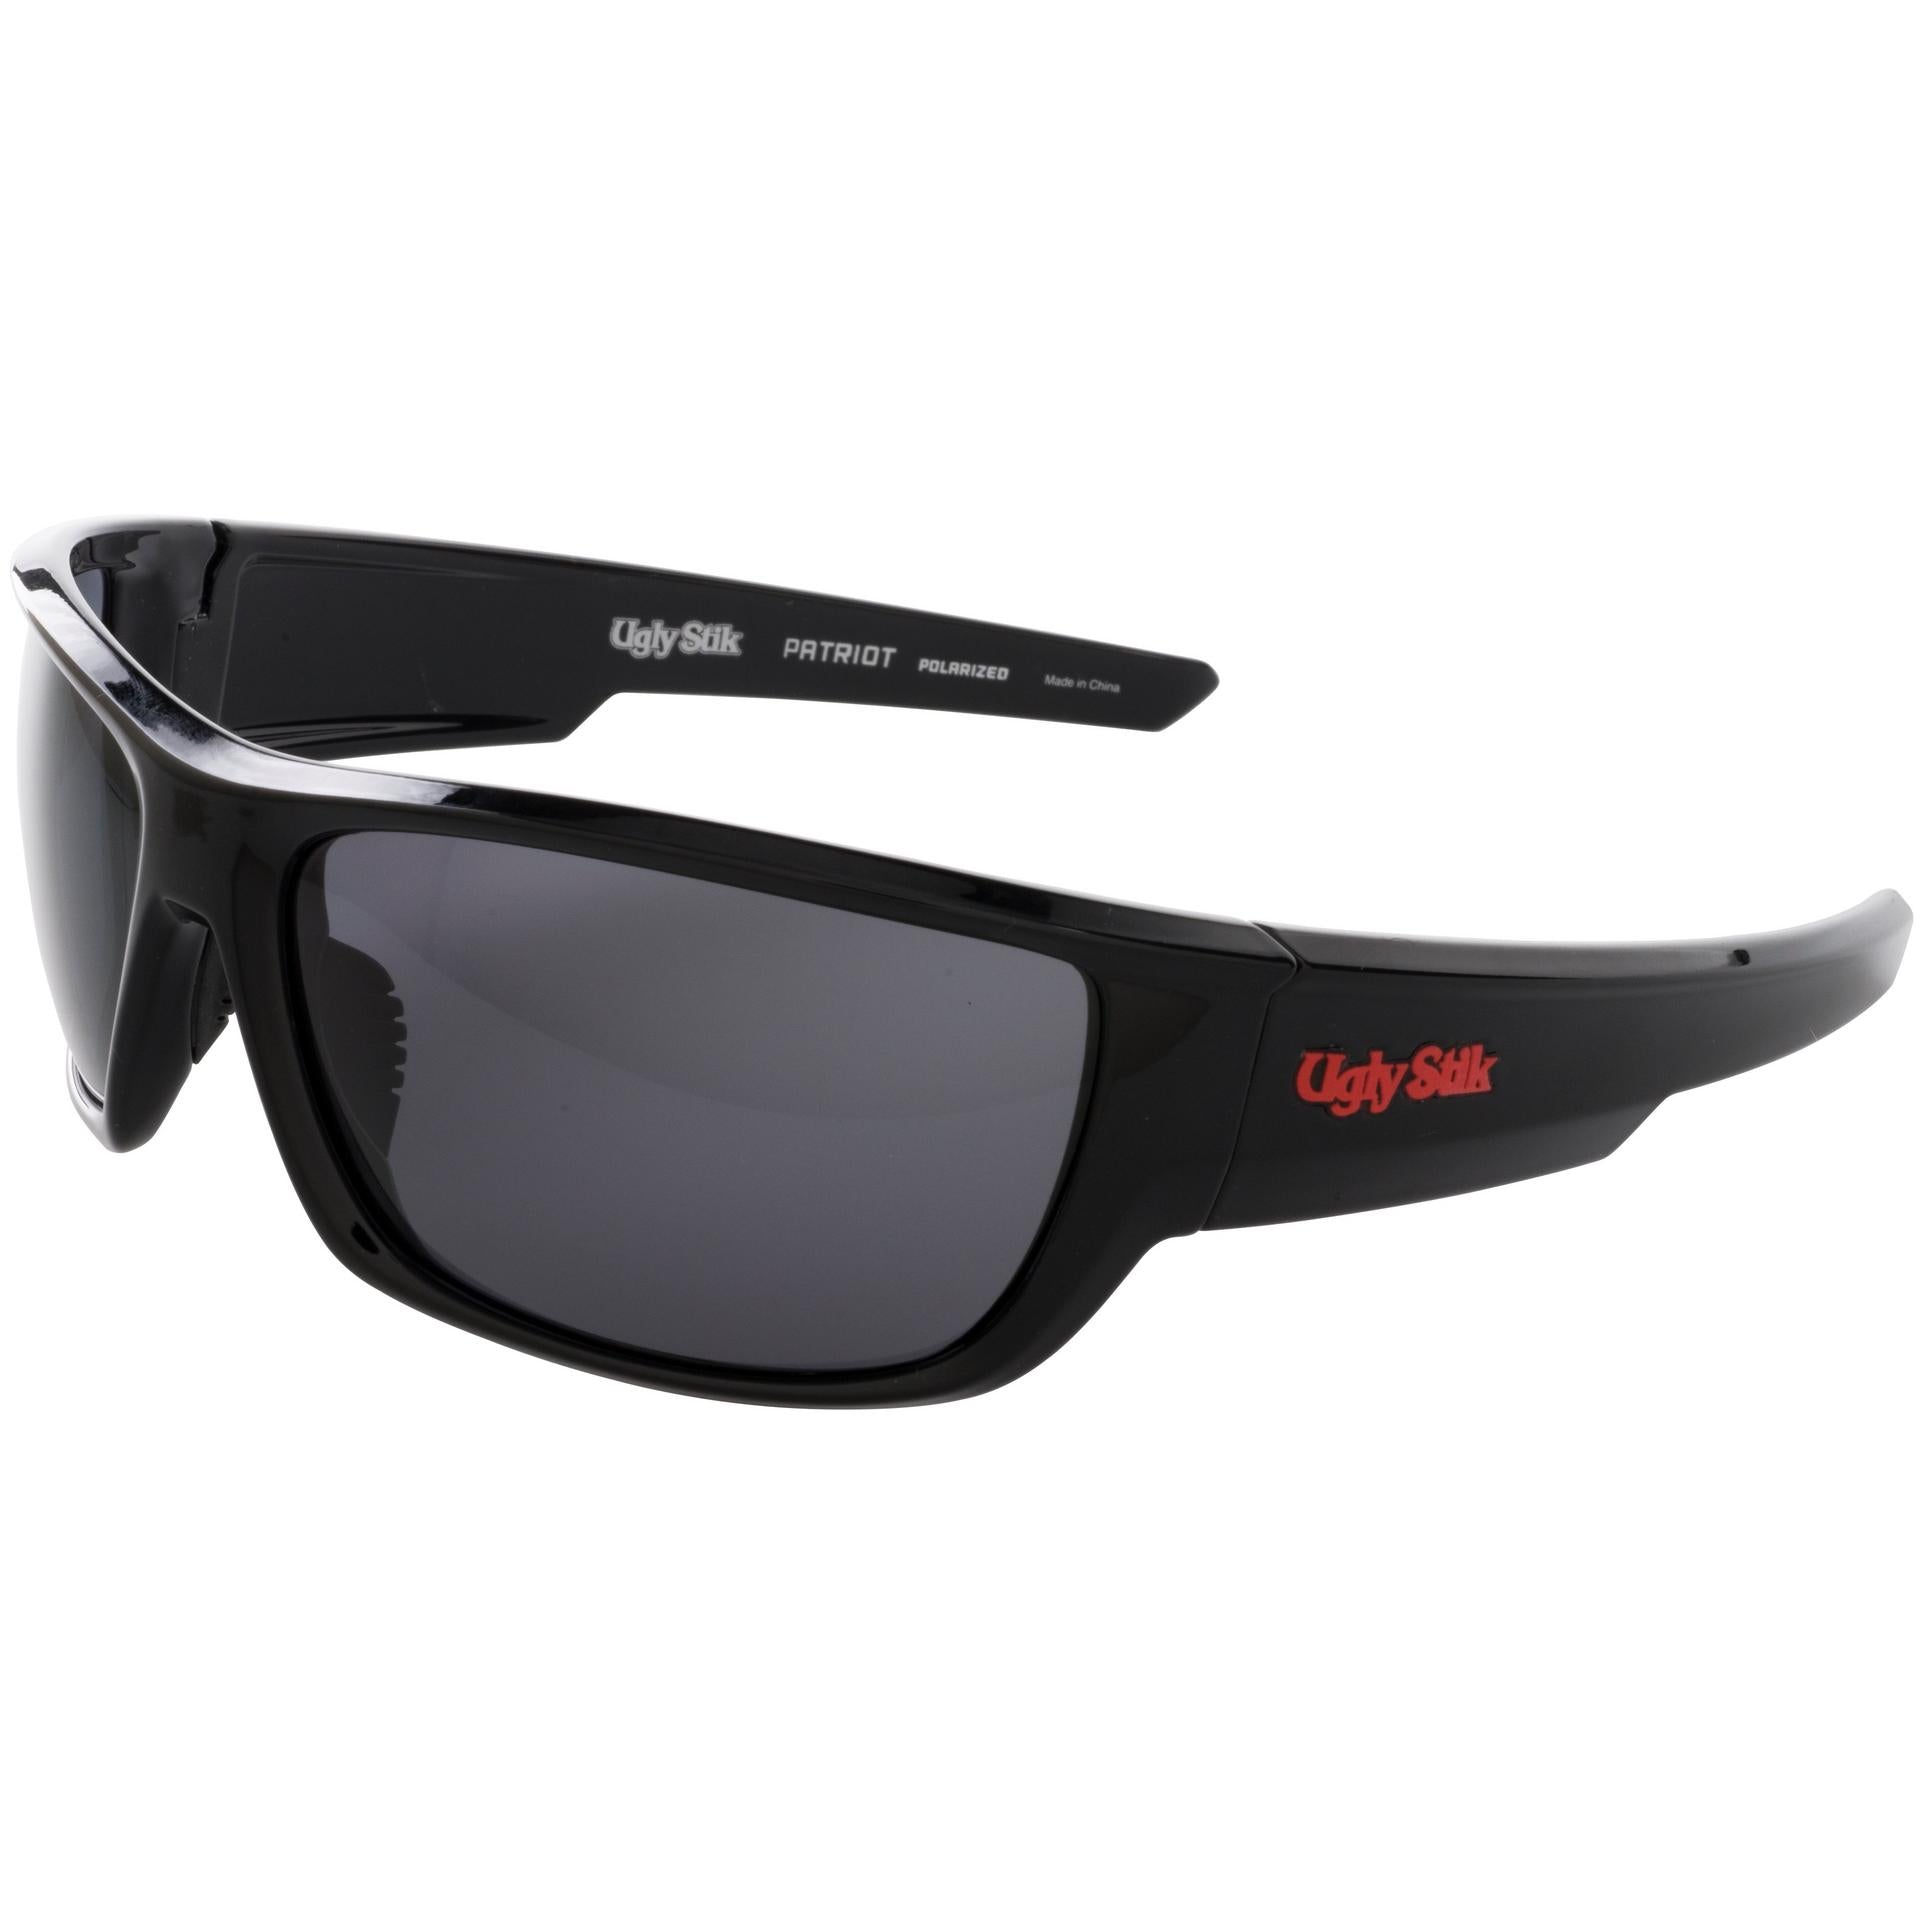 Black sunglasses with black lens